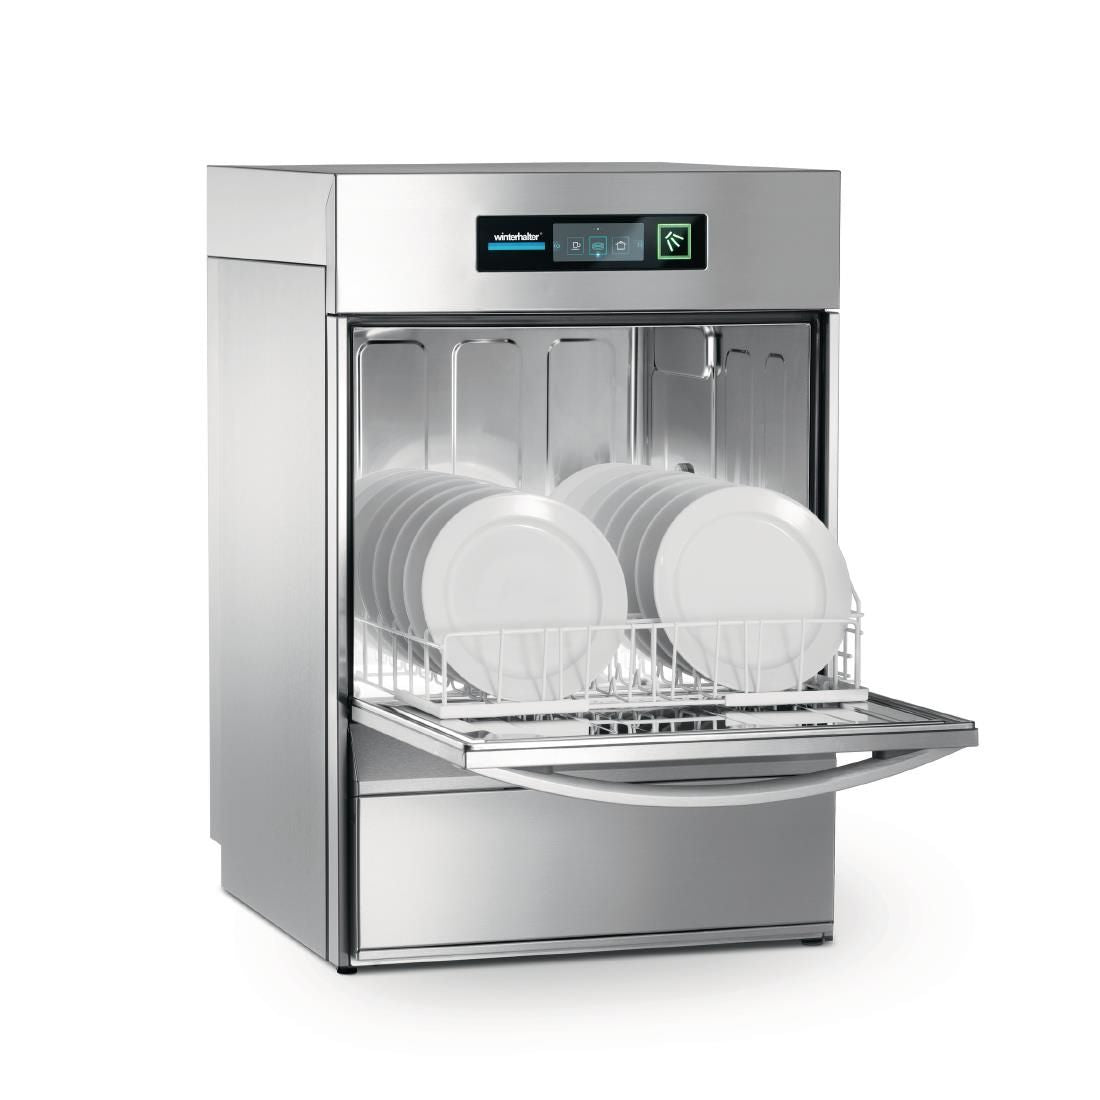 DE645 Winterhalter Undercounter Dishwasher UC-L-E Energy JD Catering Equipment Solutions Ltd